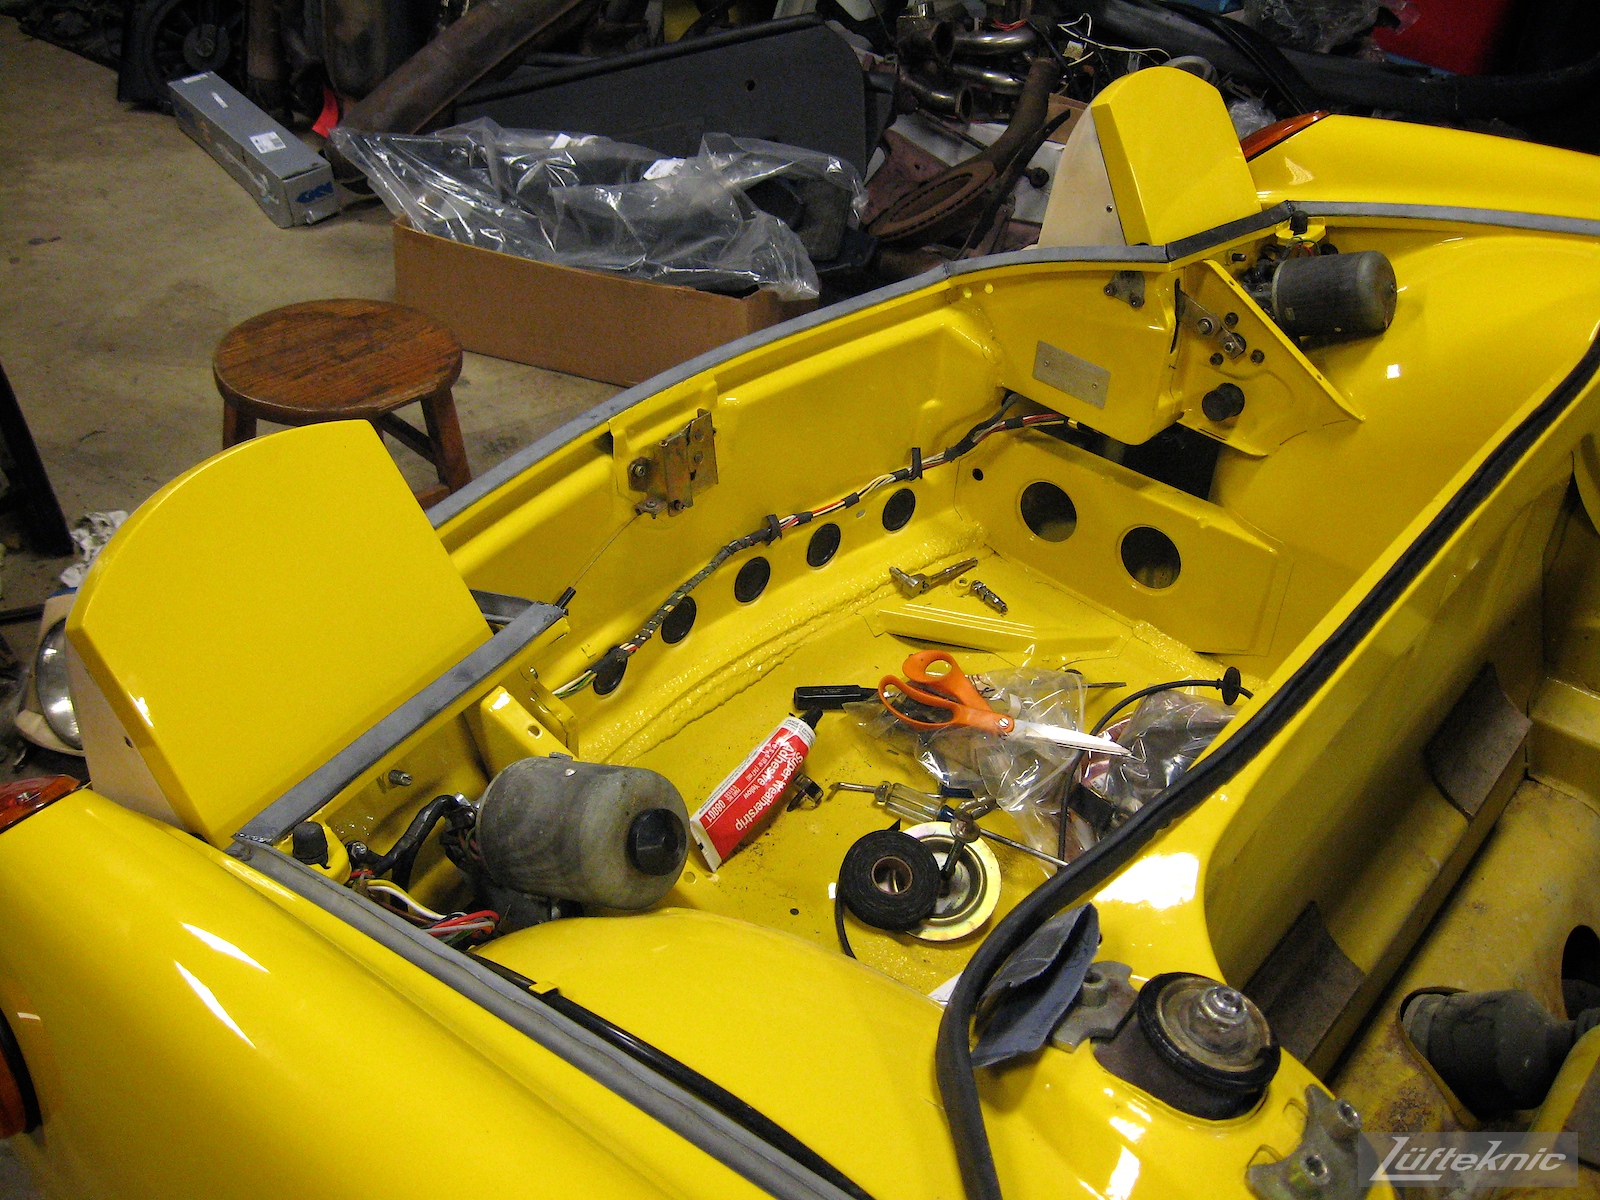 Reassembling headlights and lighting on a restored yellow Porsche 914 at Lufteknic.